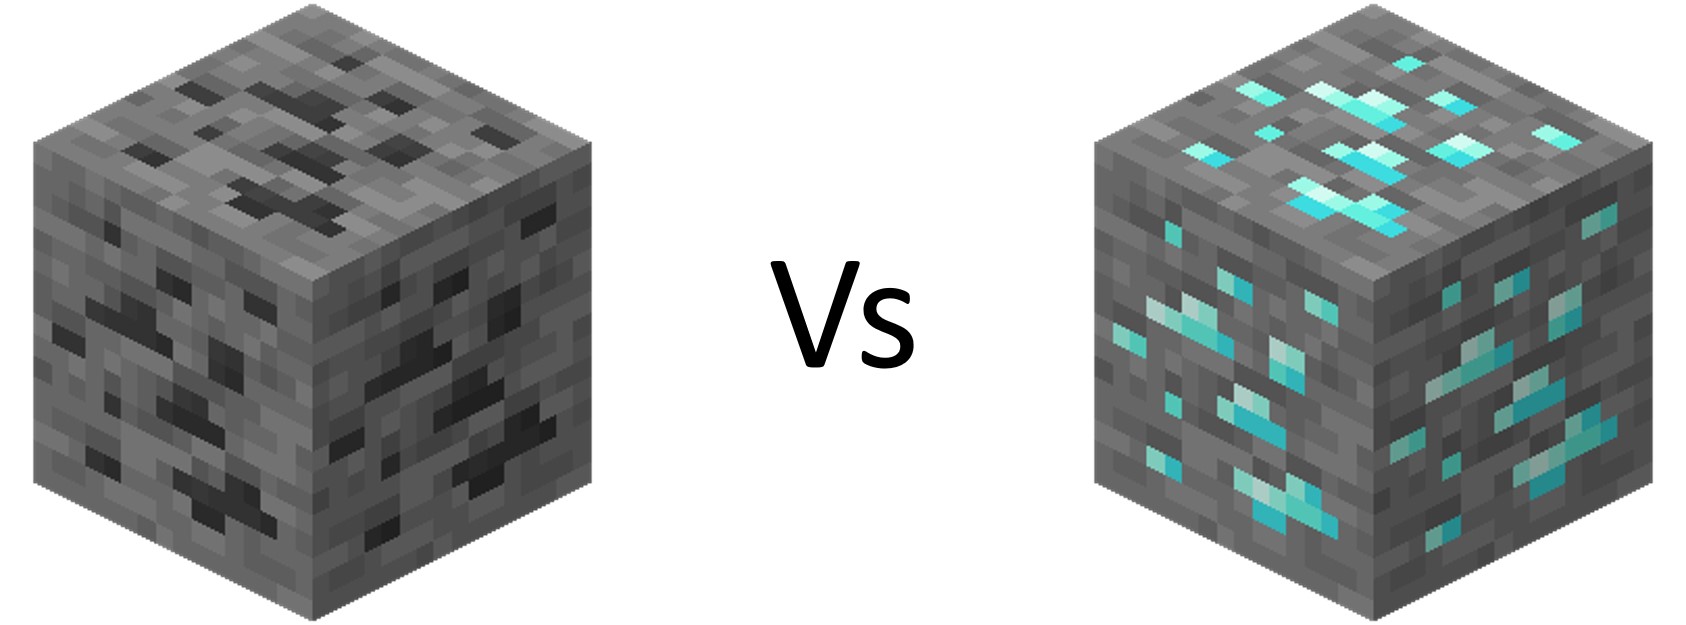 A block of coal ore vs a block of diamond ore from Minecraft